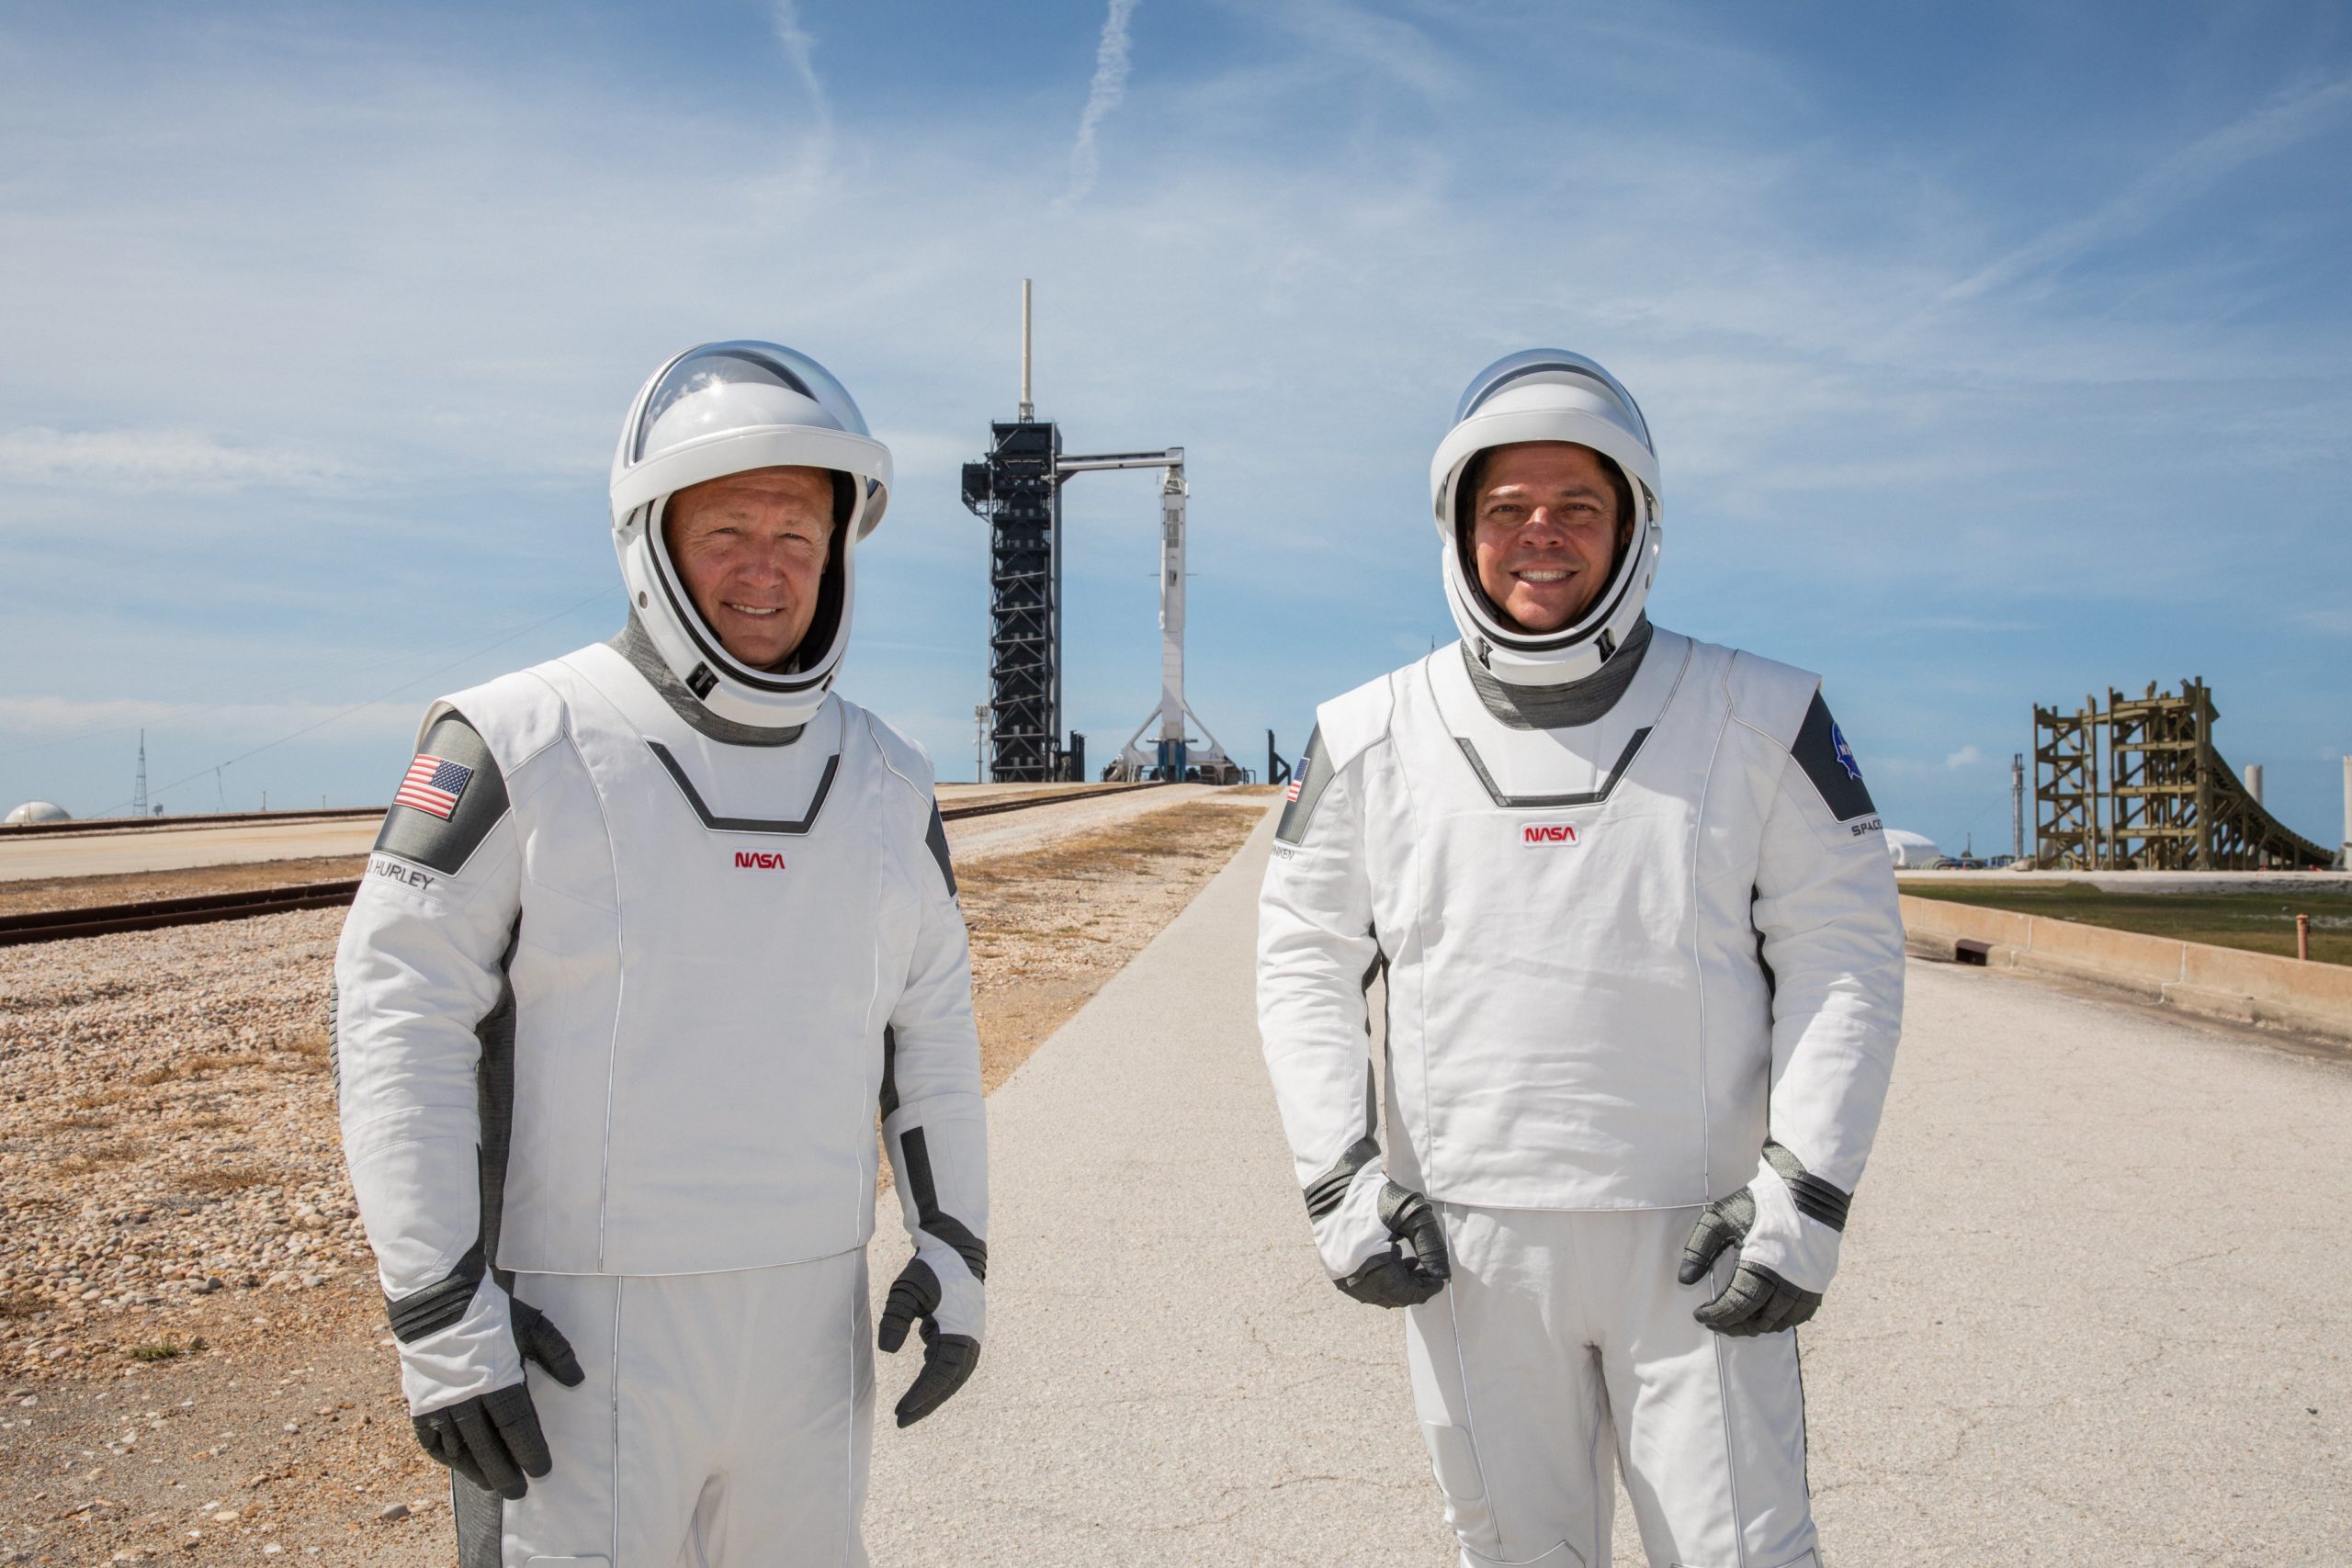 Meet the crew hurley behnken primed for historic us return to space